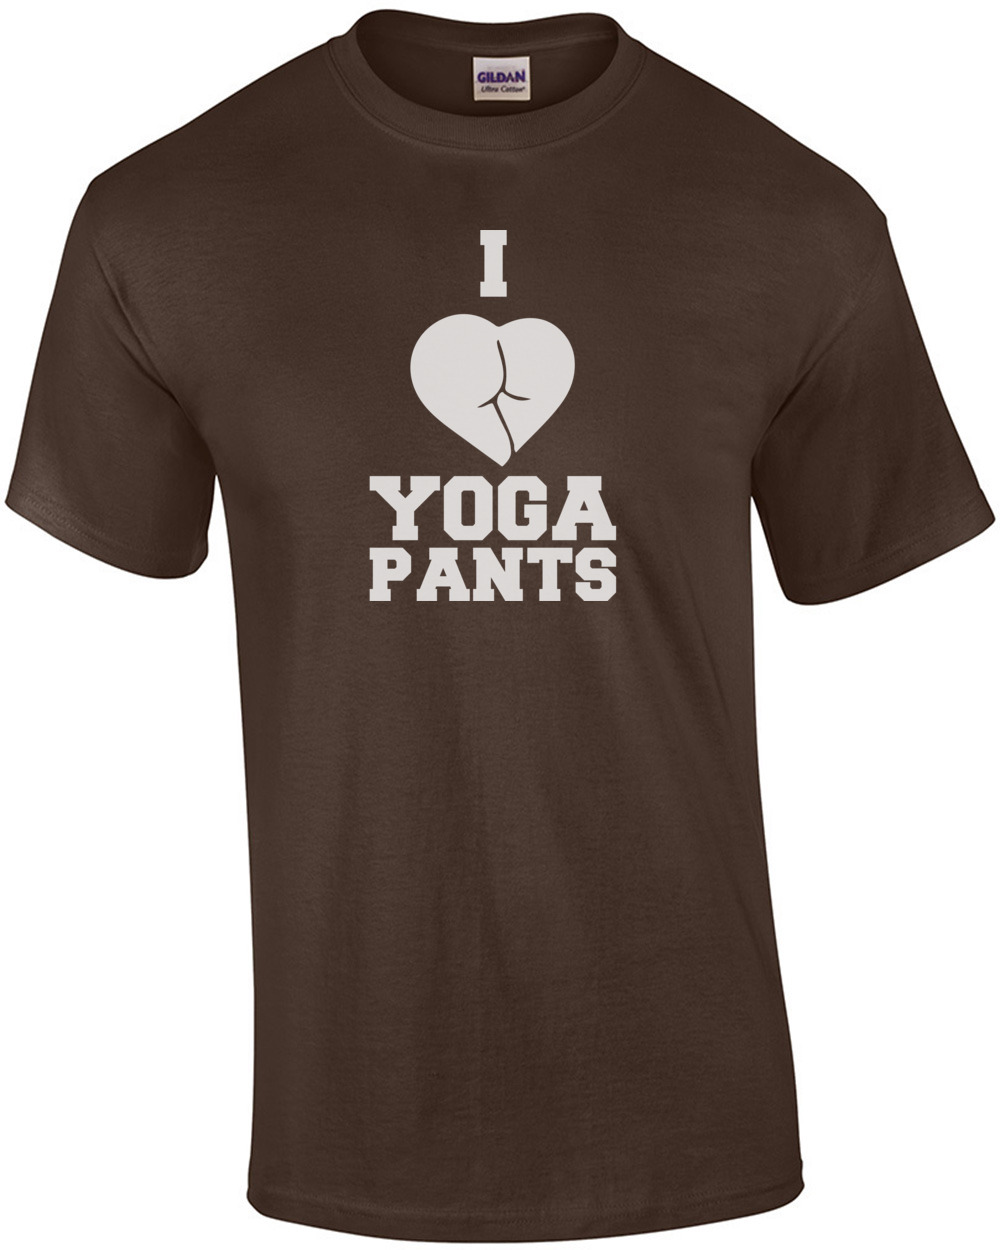 Funny Yoga - I Love Yoga Pants - Funny Yoga T-shirt Shirt | eBay